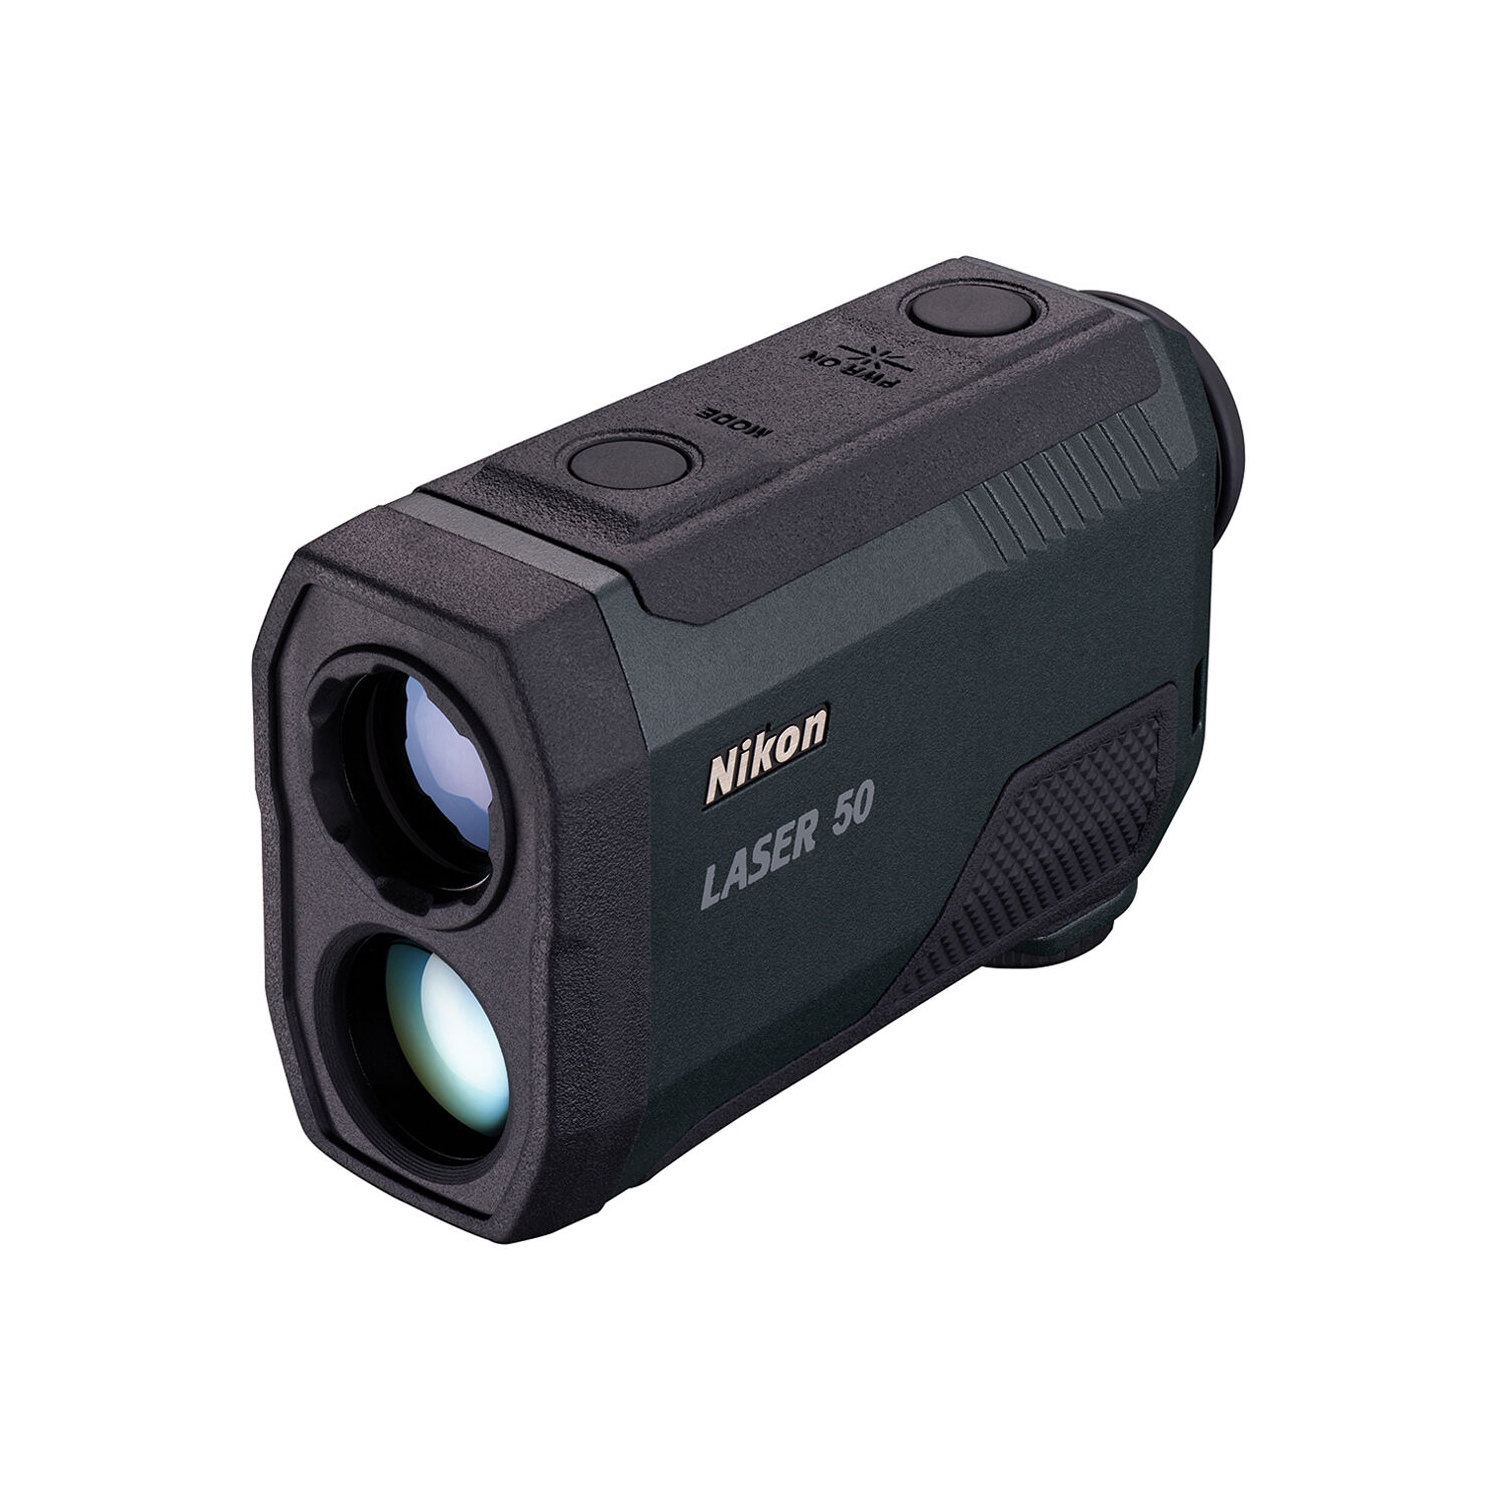 Nikon LASER 50 Laser Golf Rangefinder - 6x21 (10-2,000yds)